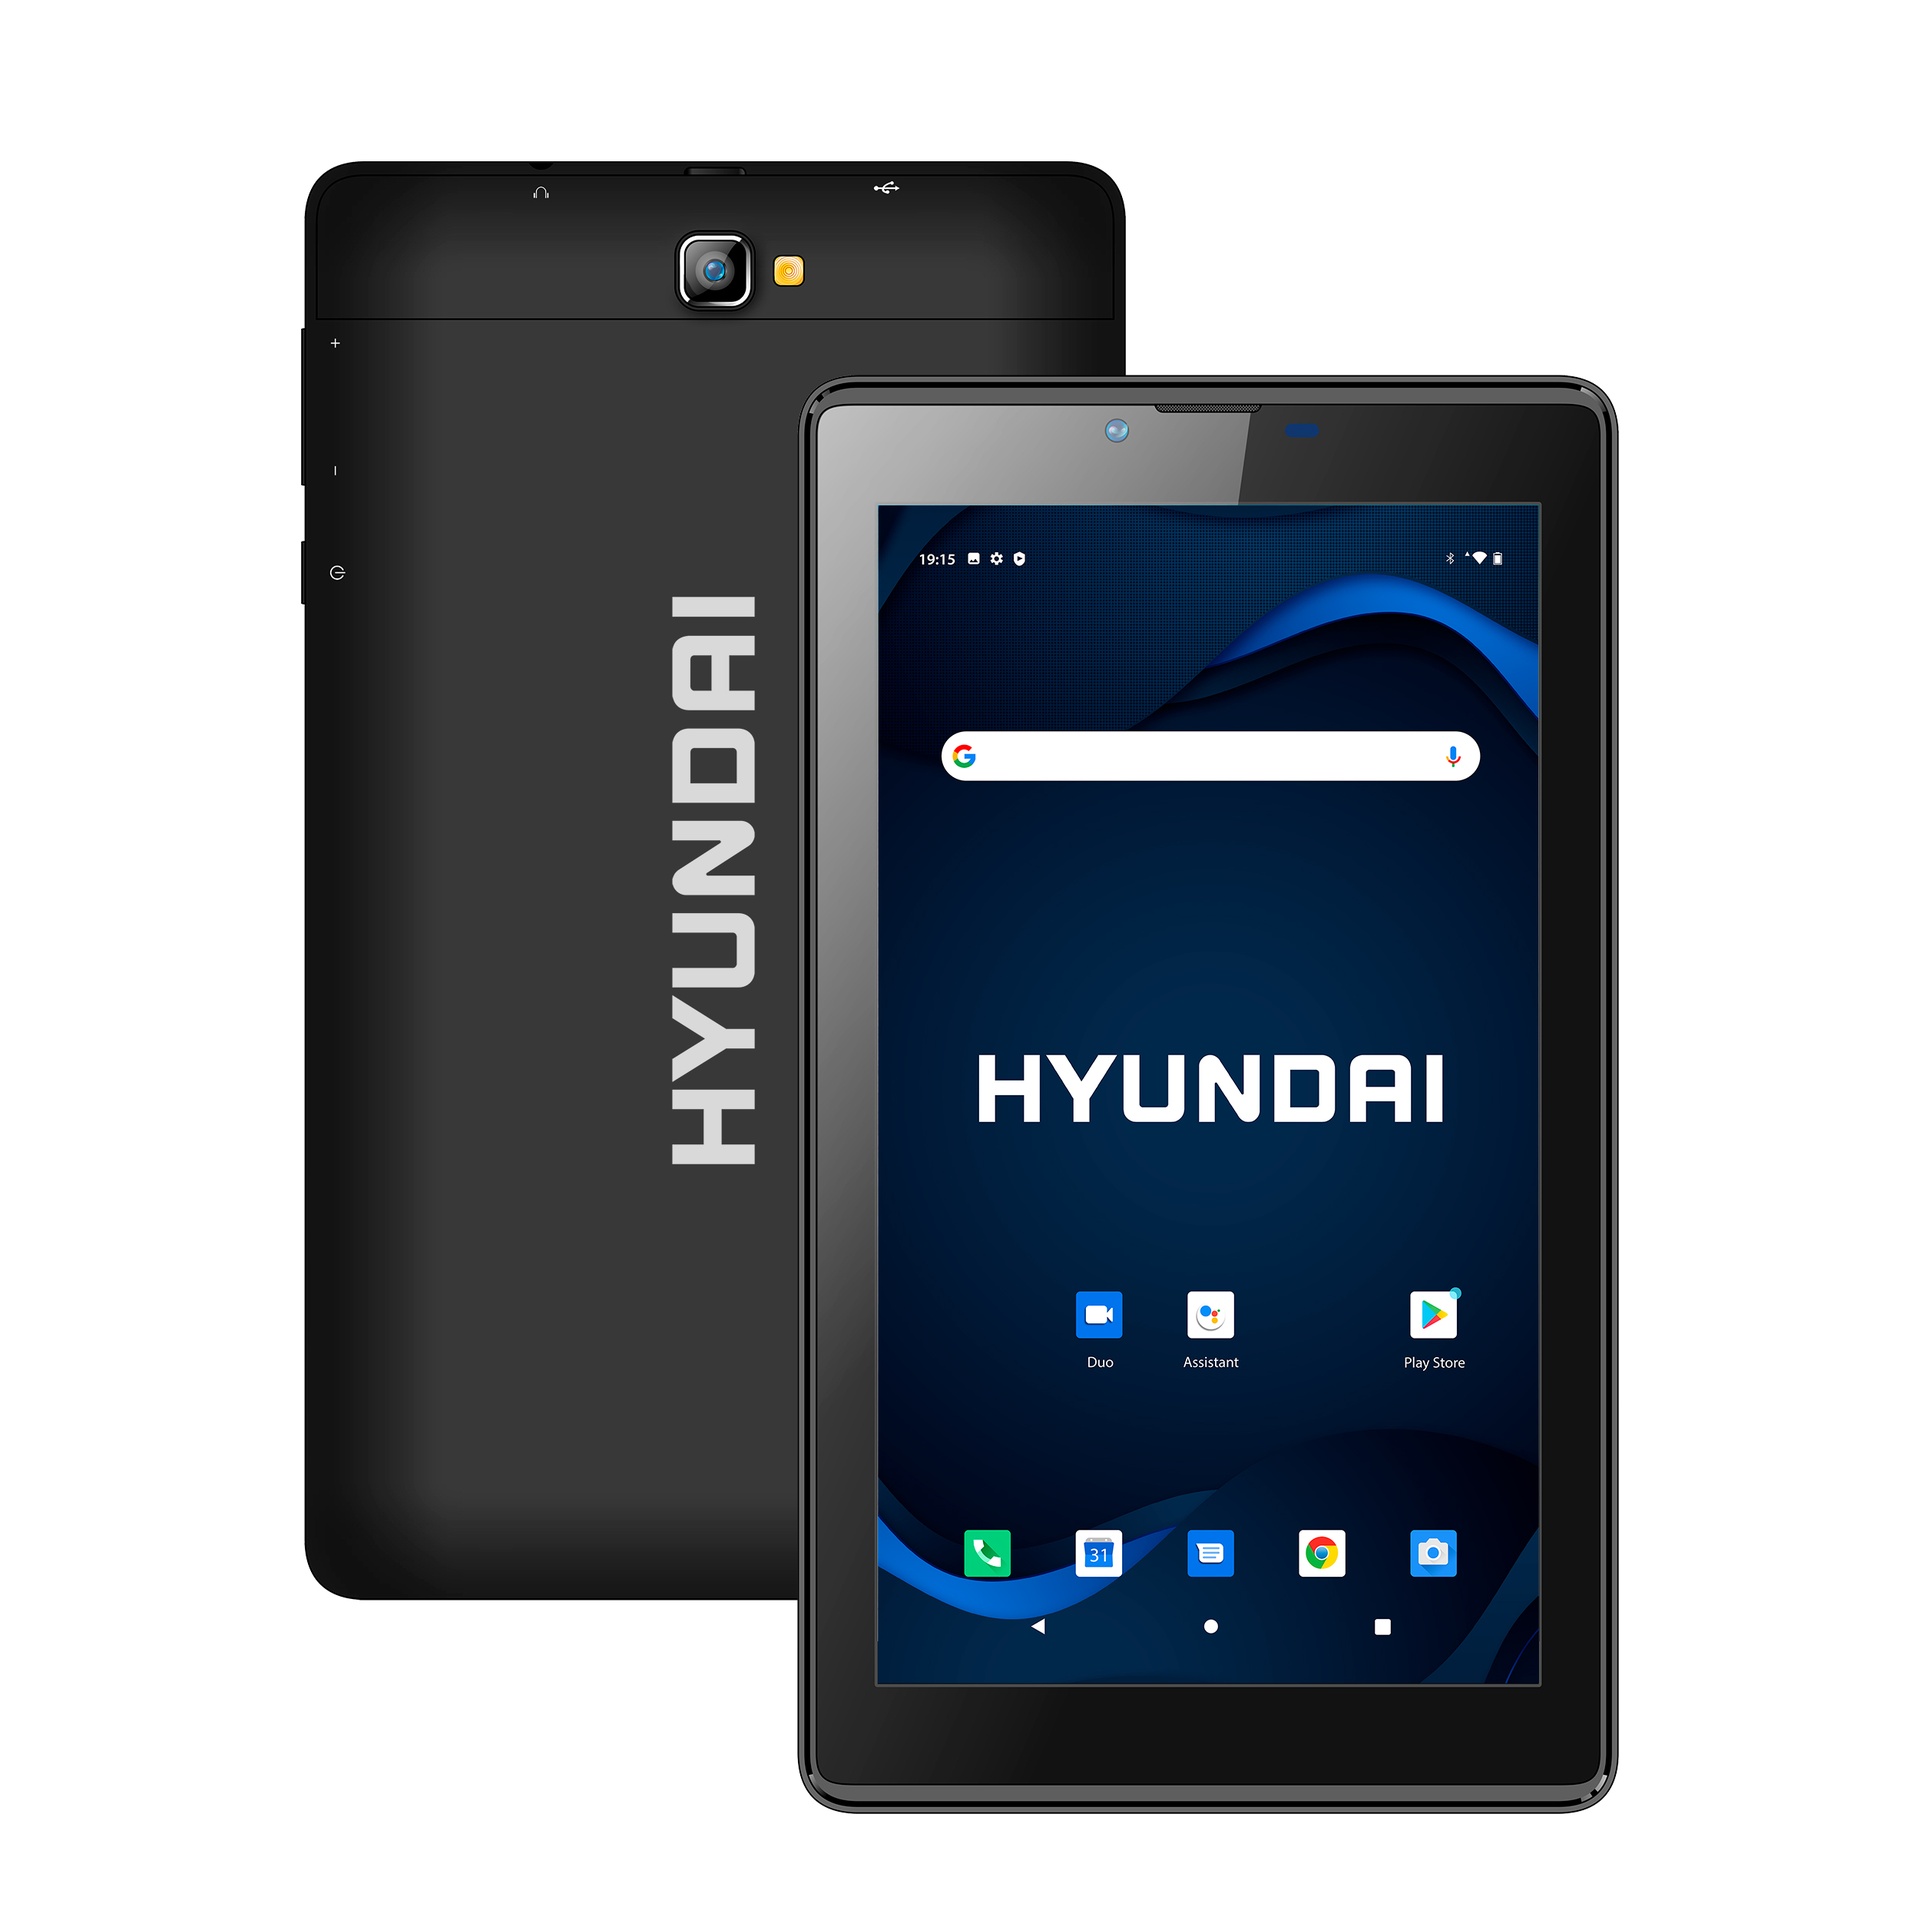 Hyundai HyTab 7GB1, 7" Tablet, 1024x600 IPS, Android 10 Go edition, Quad-Core Processor, 1GB RAM, 16GB Storage, 2MP/2MP, 3G - Black HT7GB1MBK UPC 810033035043 - HYUNDAI